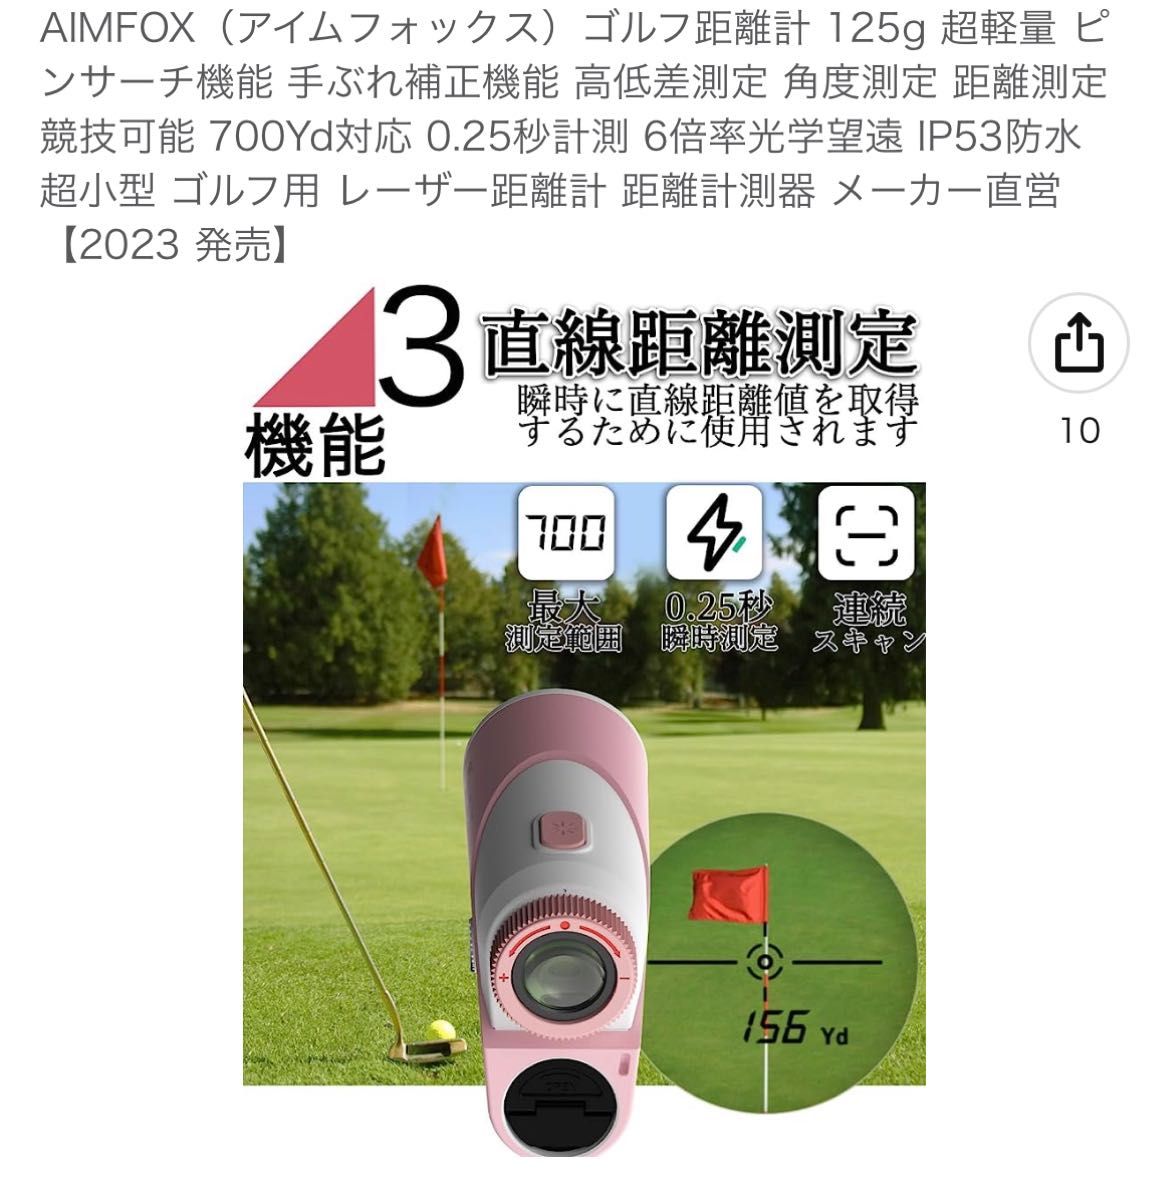 AIMFOX（アイムフォックス）ゴルフ距離計 125g 超軽量 ピンサーチ機能 手ぶれ補正機能 高低差測定 角度測定 距離測定